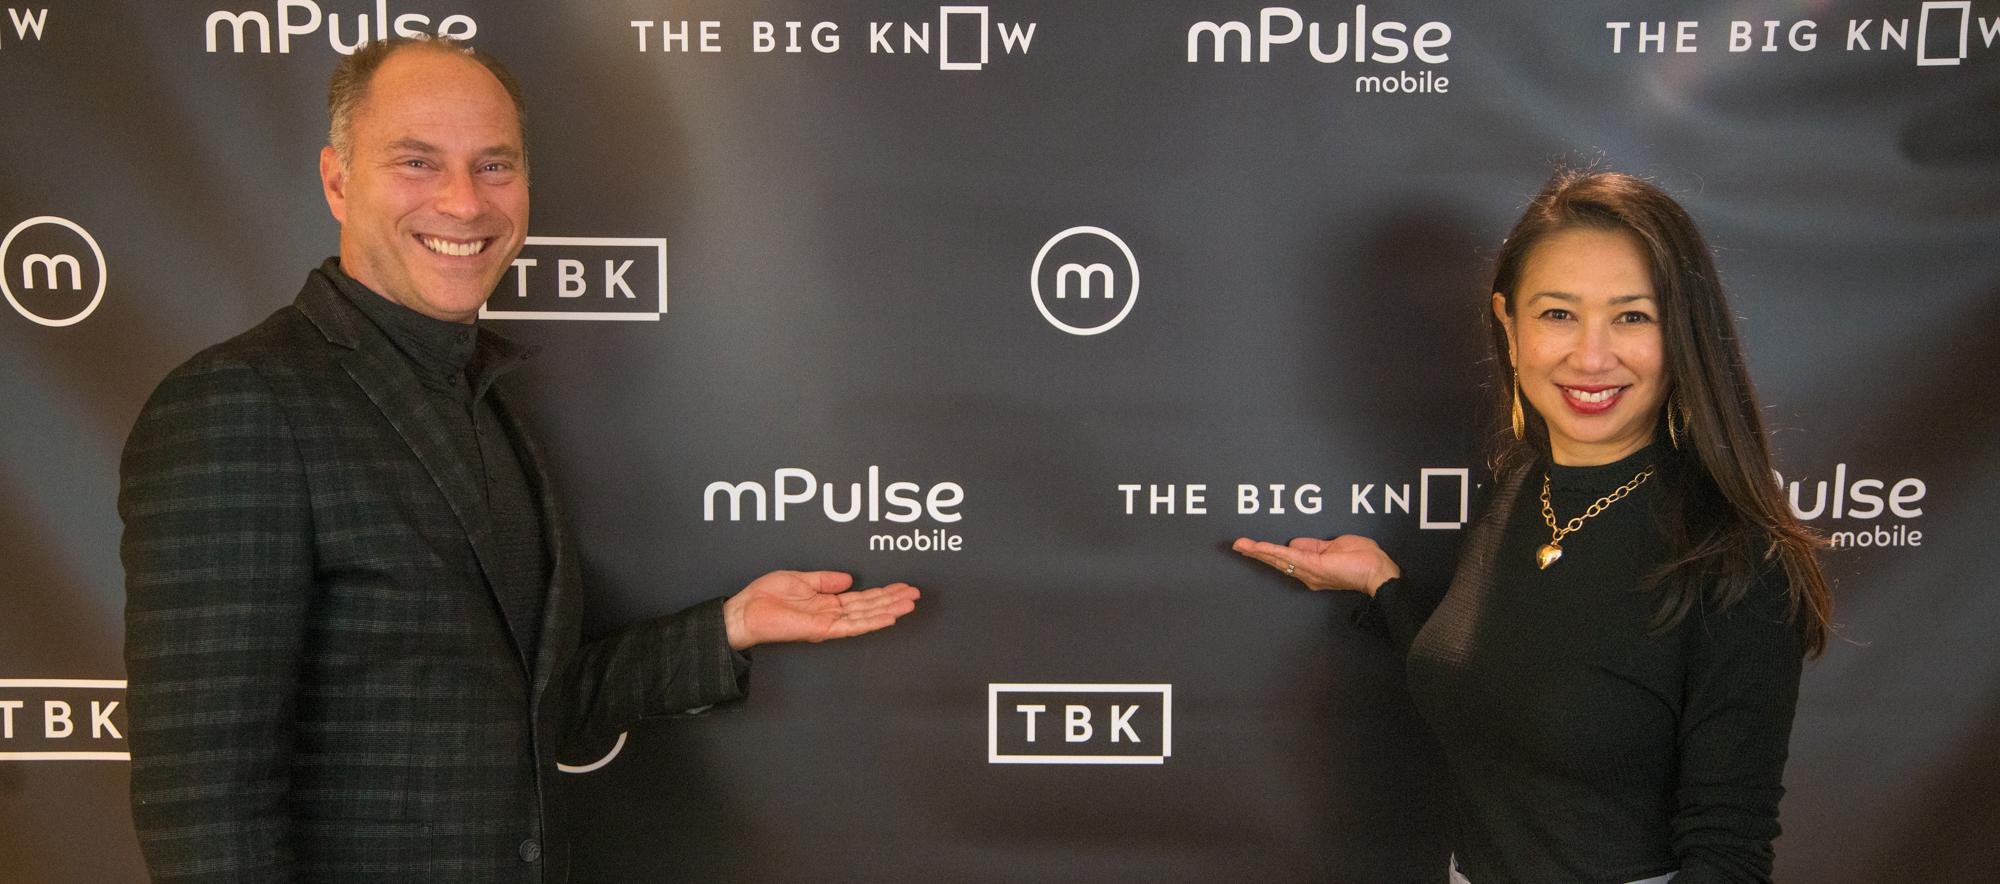 mPulse Mobile Acquires The Big Know